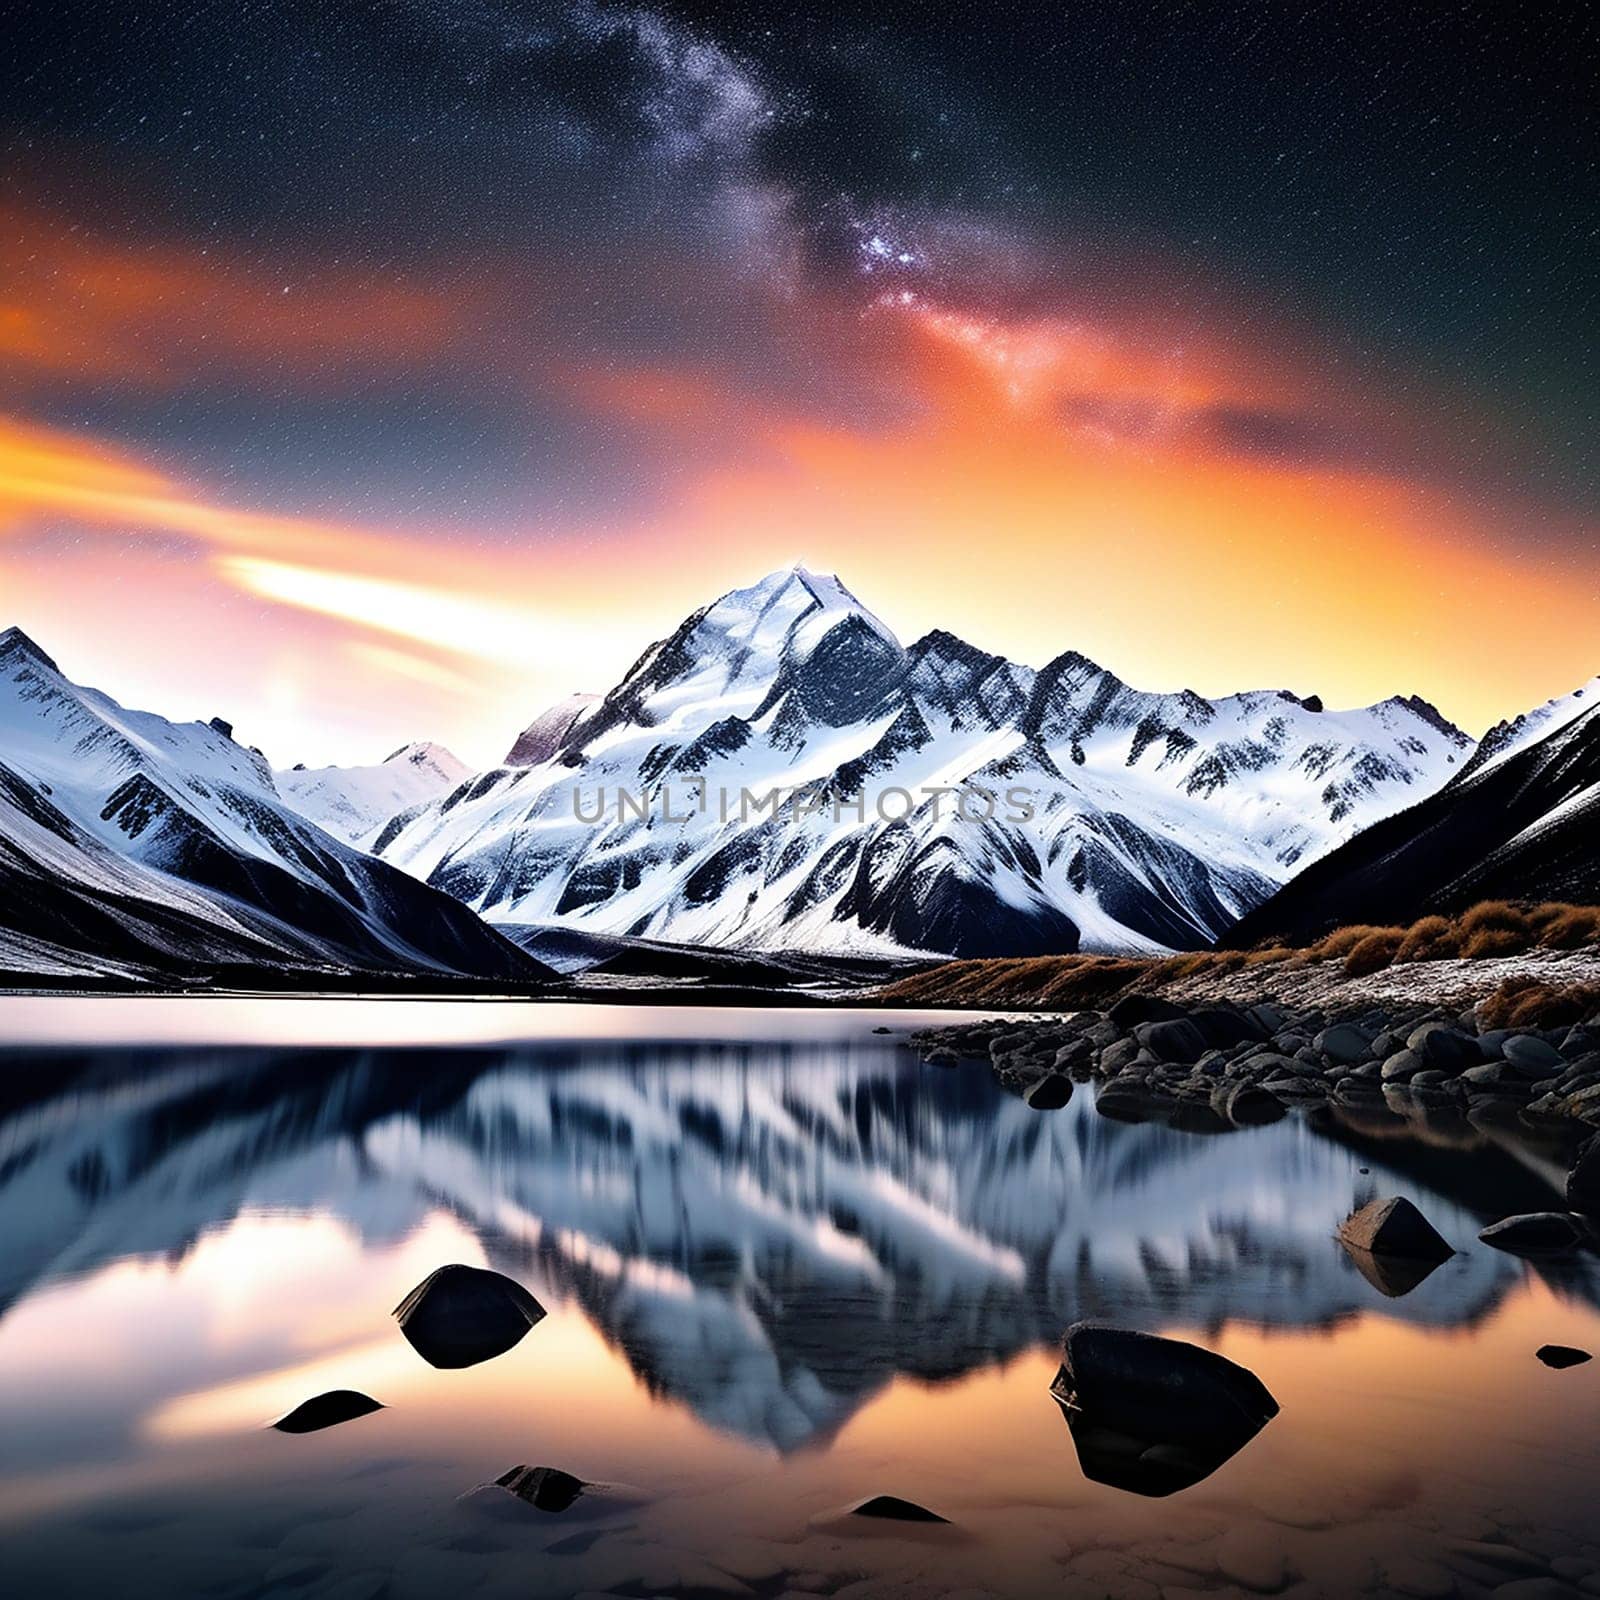 Landscape of Stars: Immersing in the Celestial Beauty of Aoraki Mount Cook.